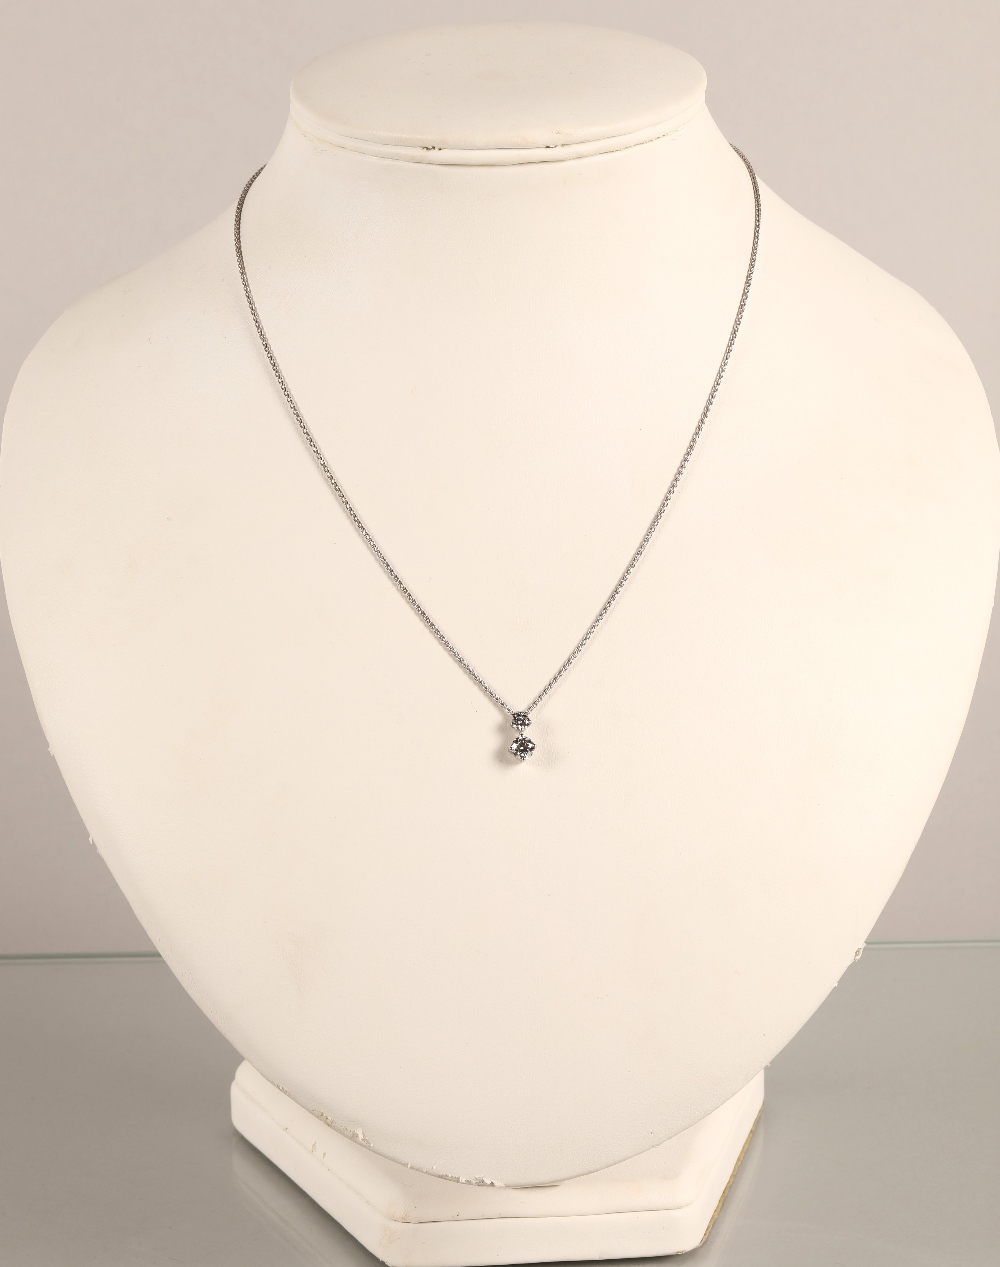 Ladies two stone diamond pendant mounted on an 18ct white gold chain. stone one 0.5 carat, stone two